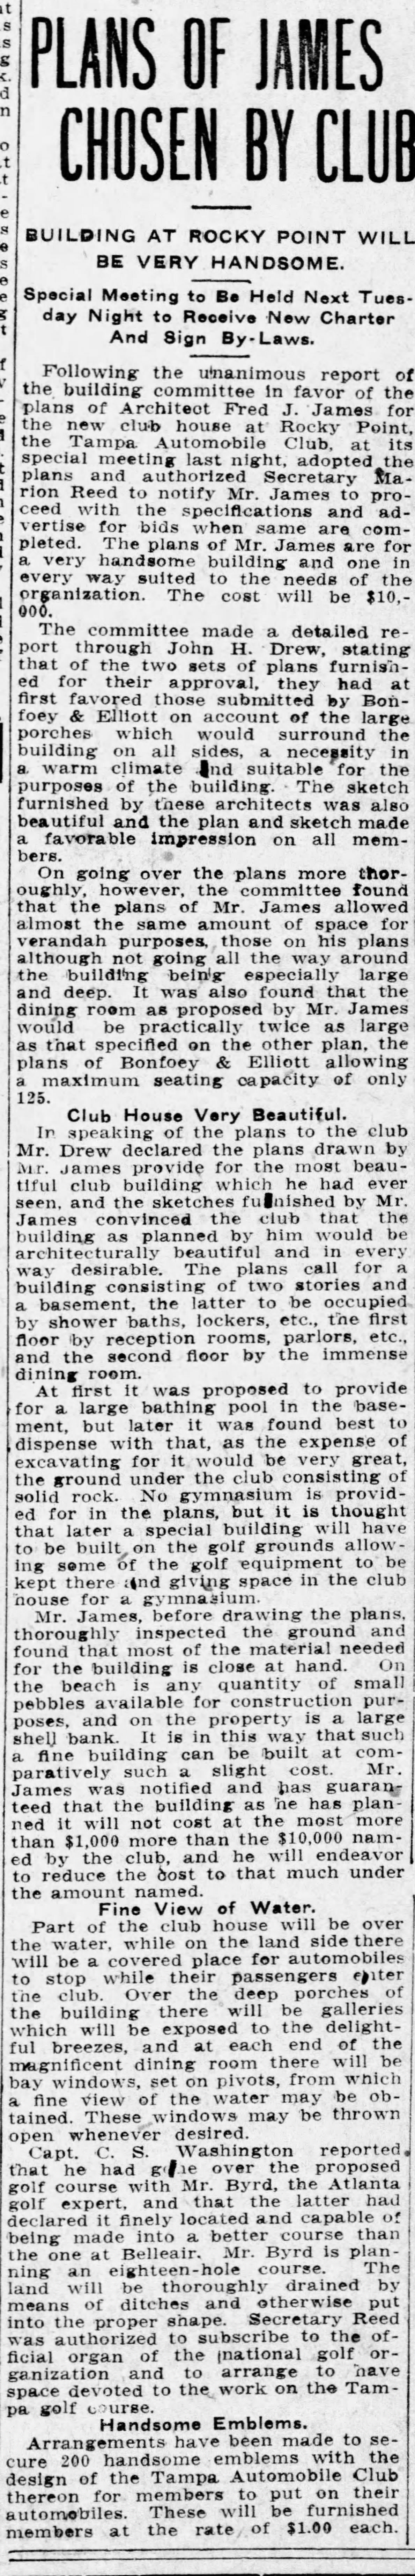 Plans of James Chosen by Club - Jul 16, 1910 Tampa Tribune